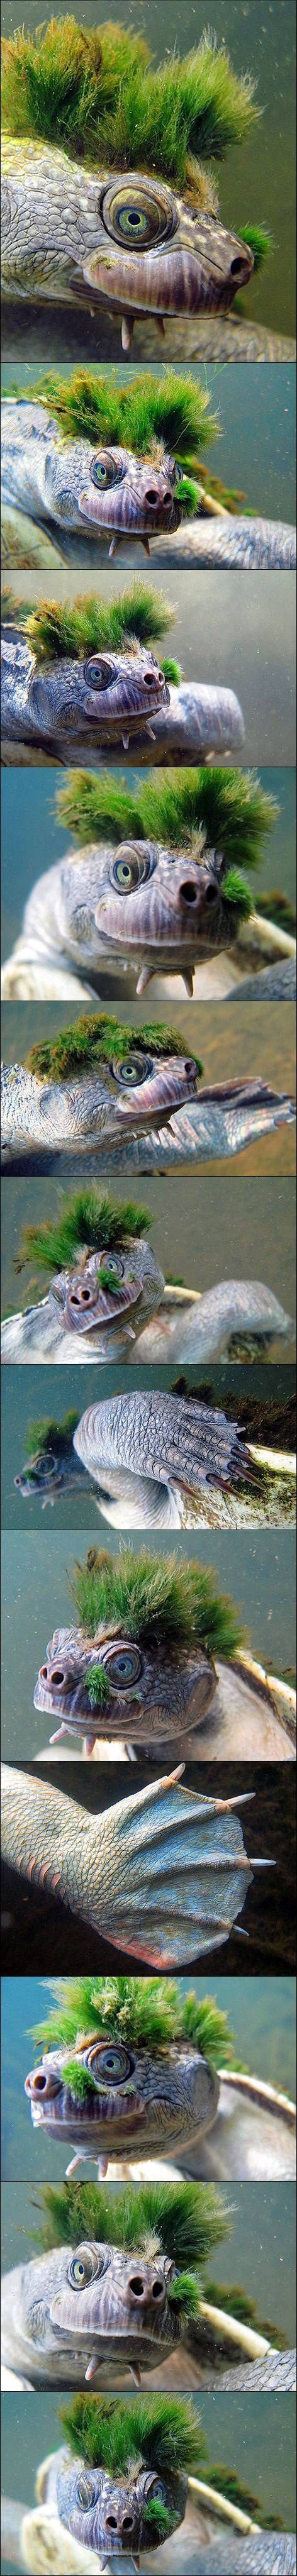 underwater lizard nonsense